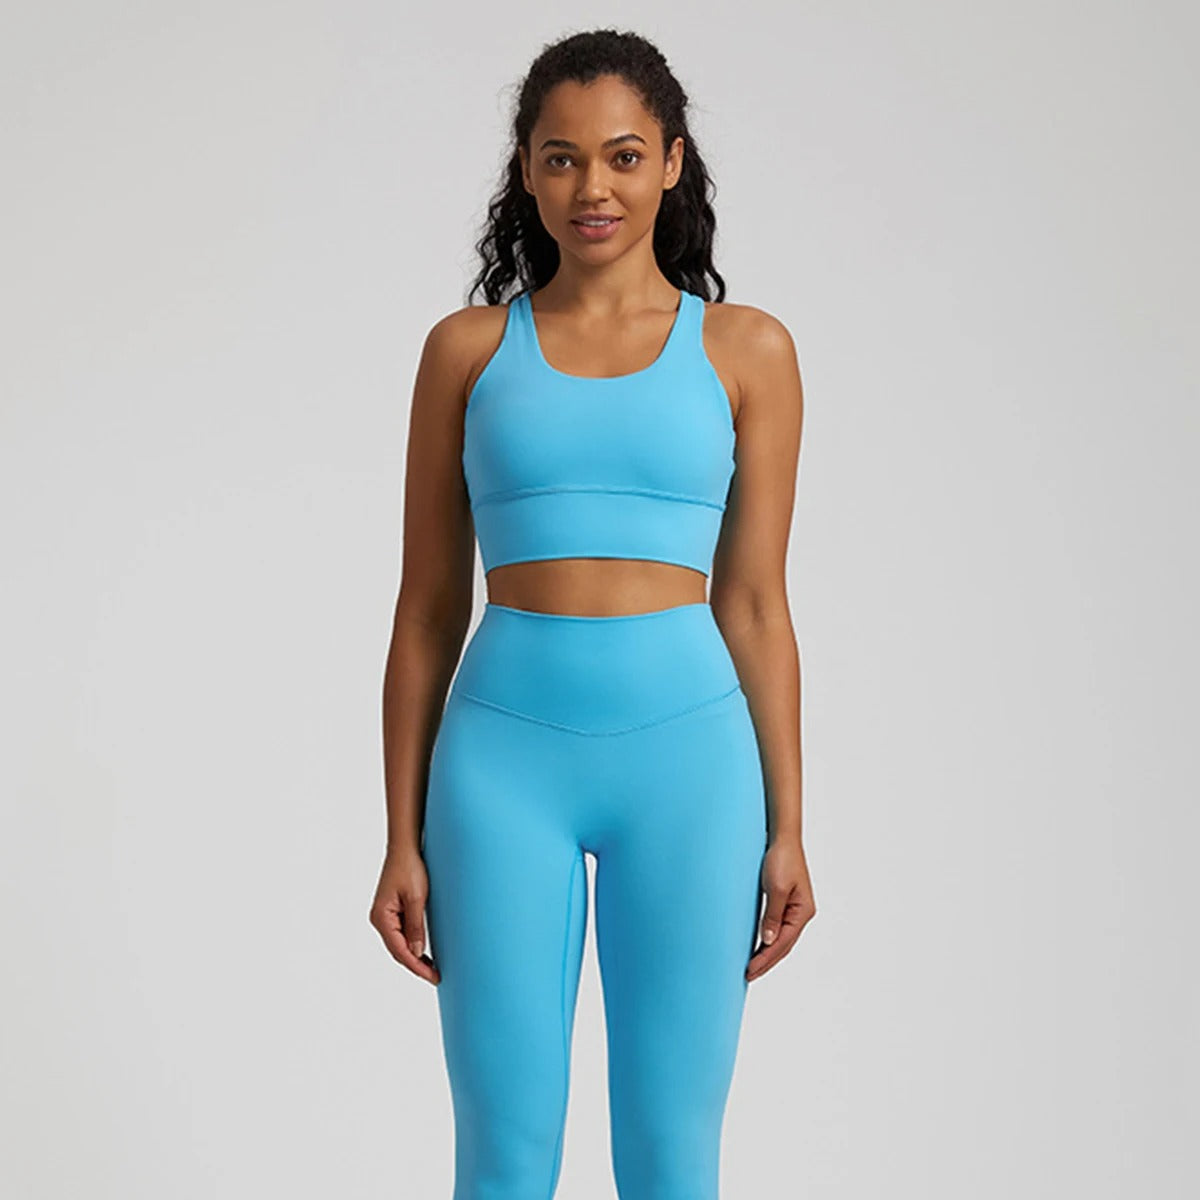 light blue sports bra and leggings set